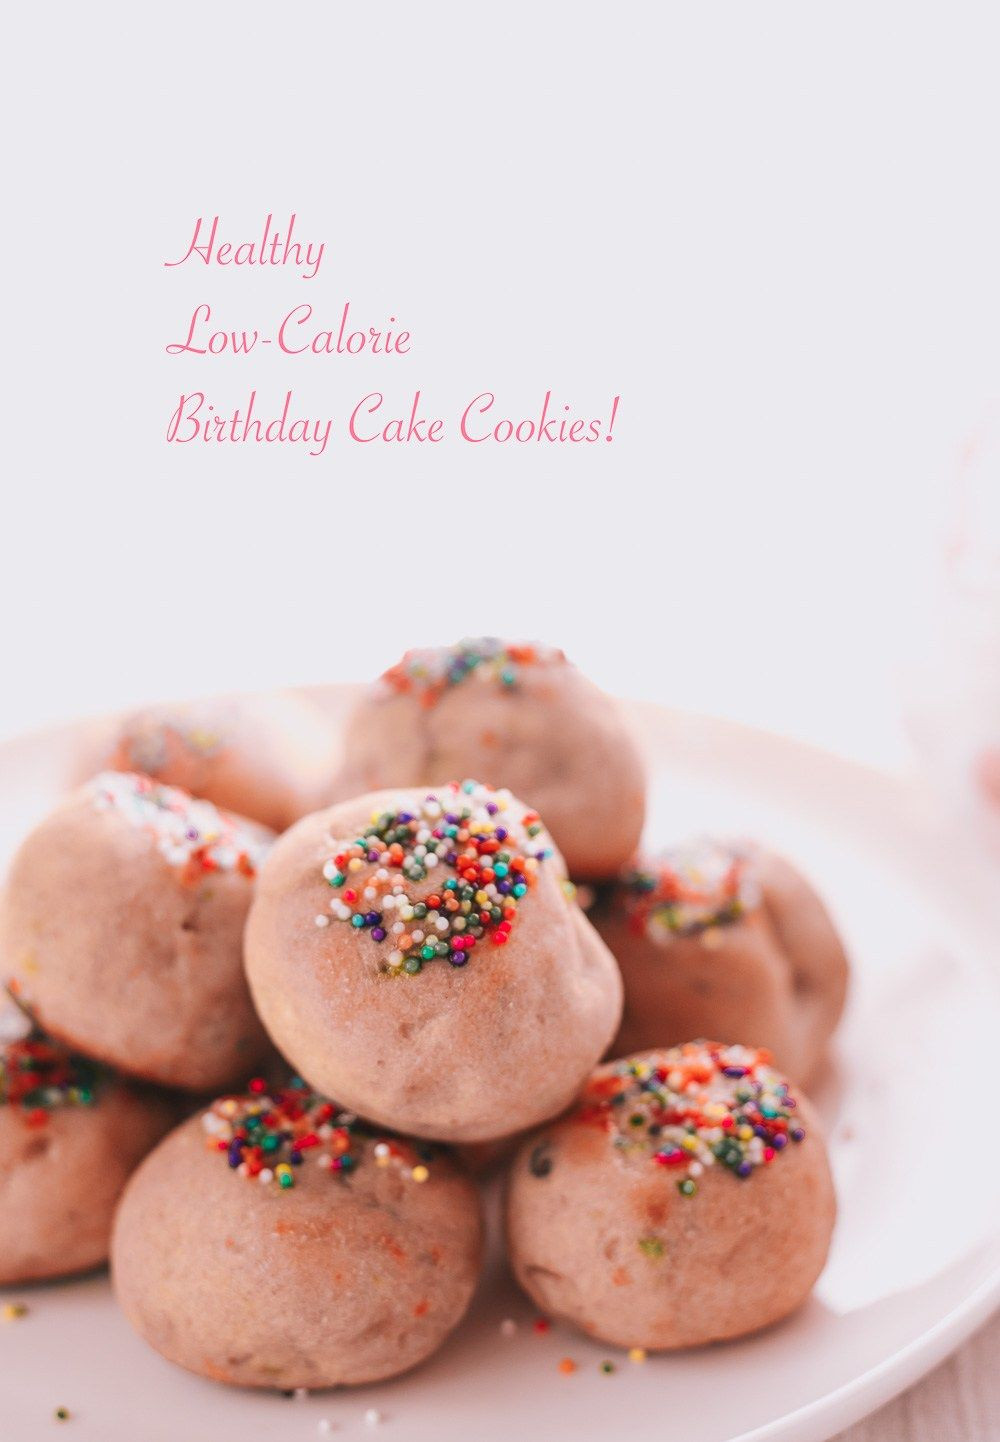 Low Calorie Birthday Cake
 Low Calorie Birthday Cake Cookies Recipe